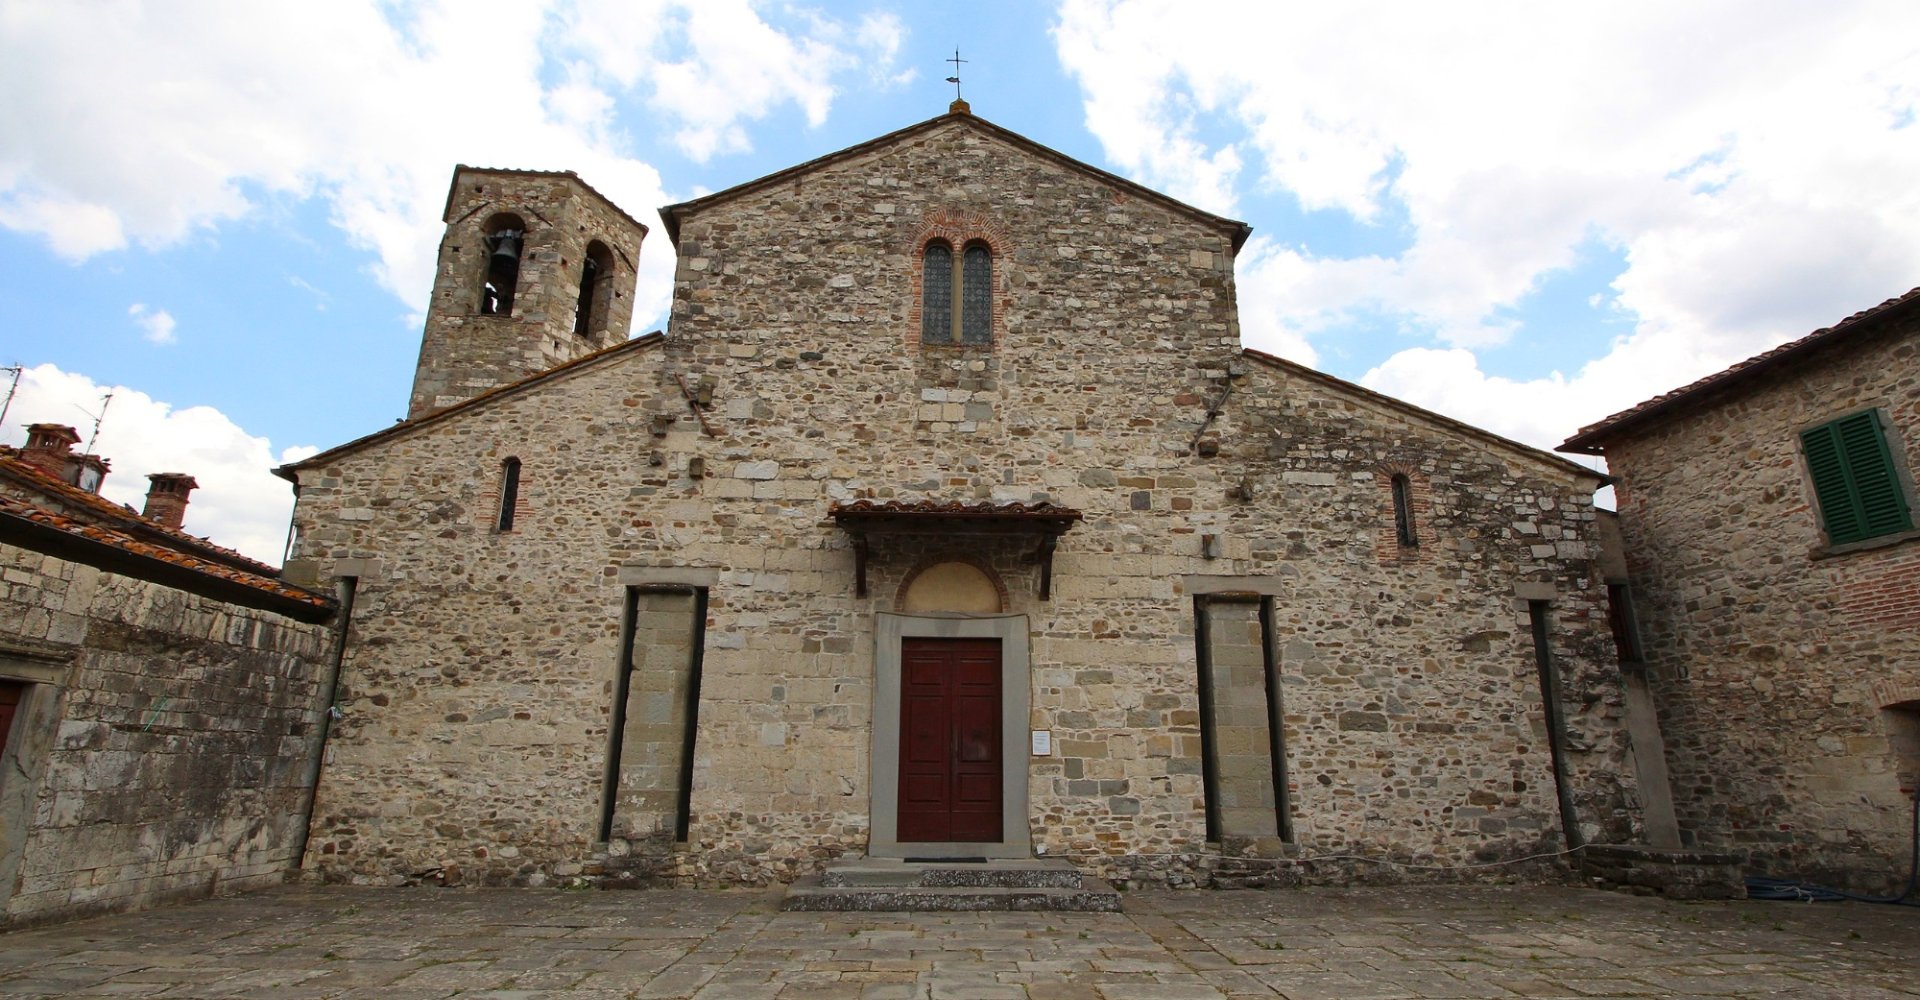 The Pieve di Sant’Antonino a Socana